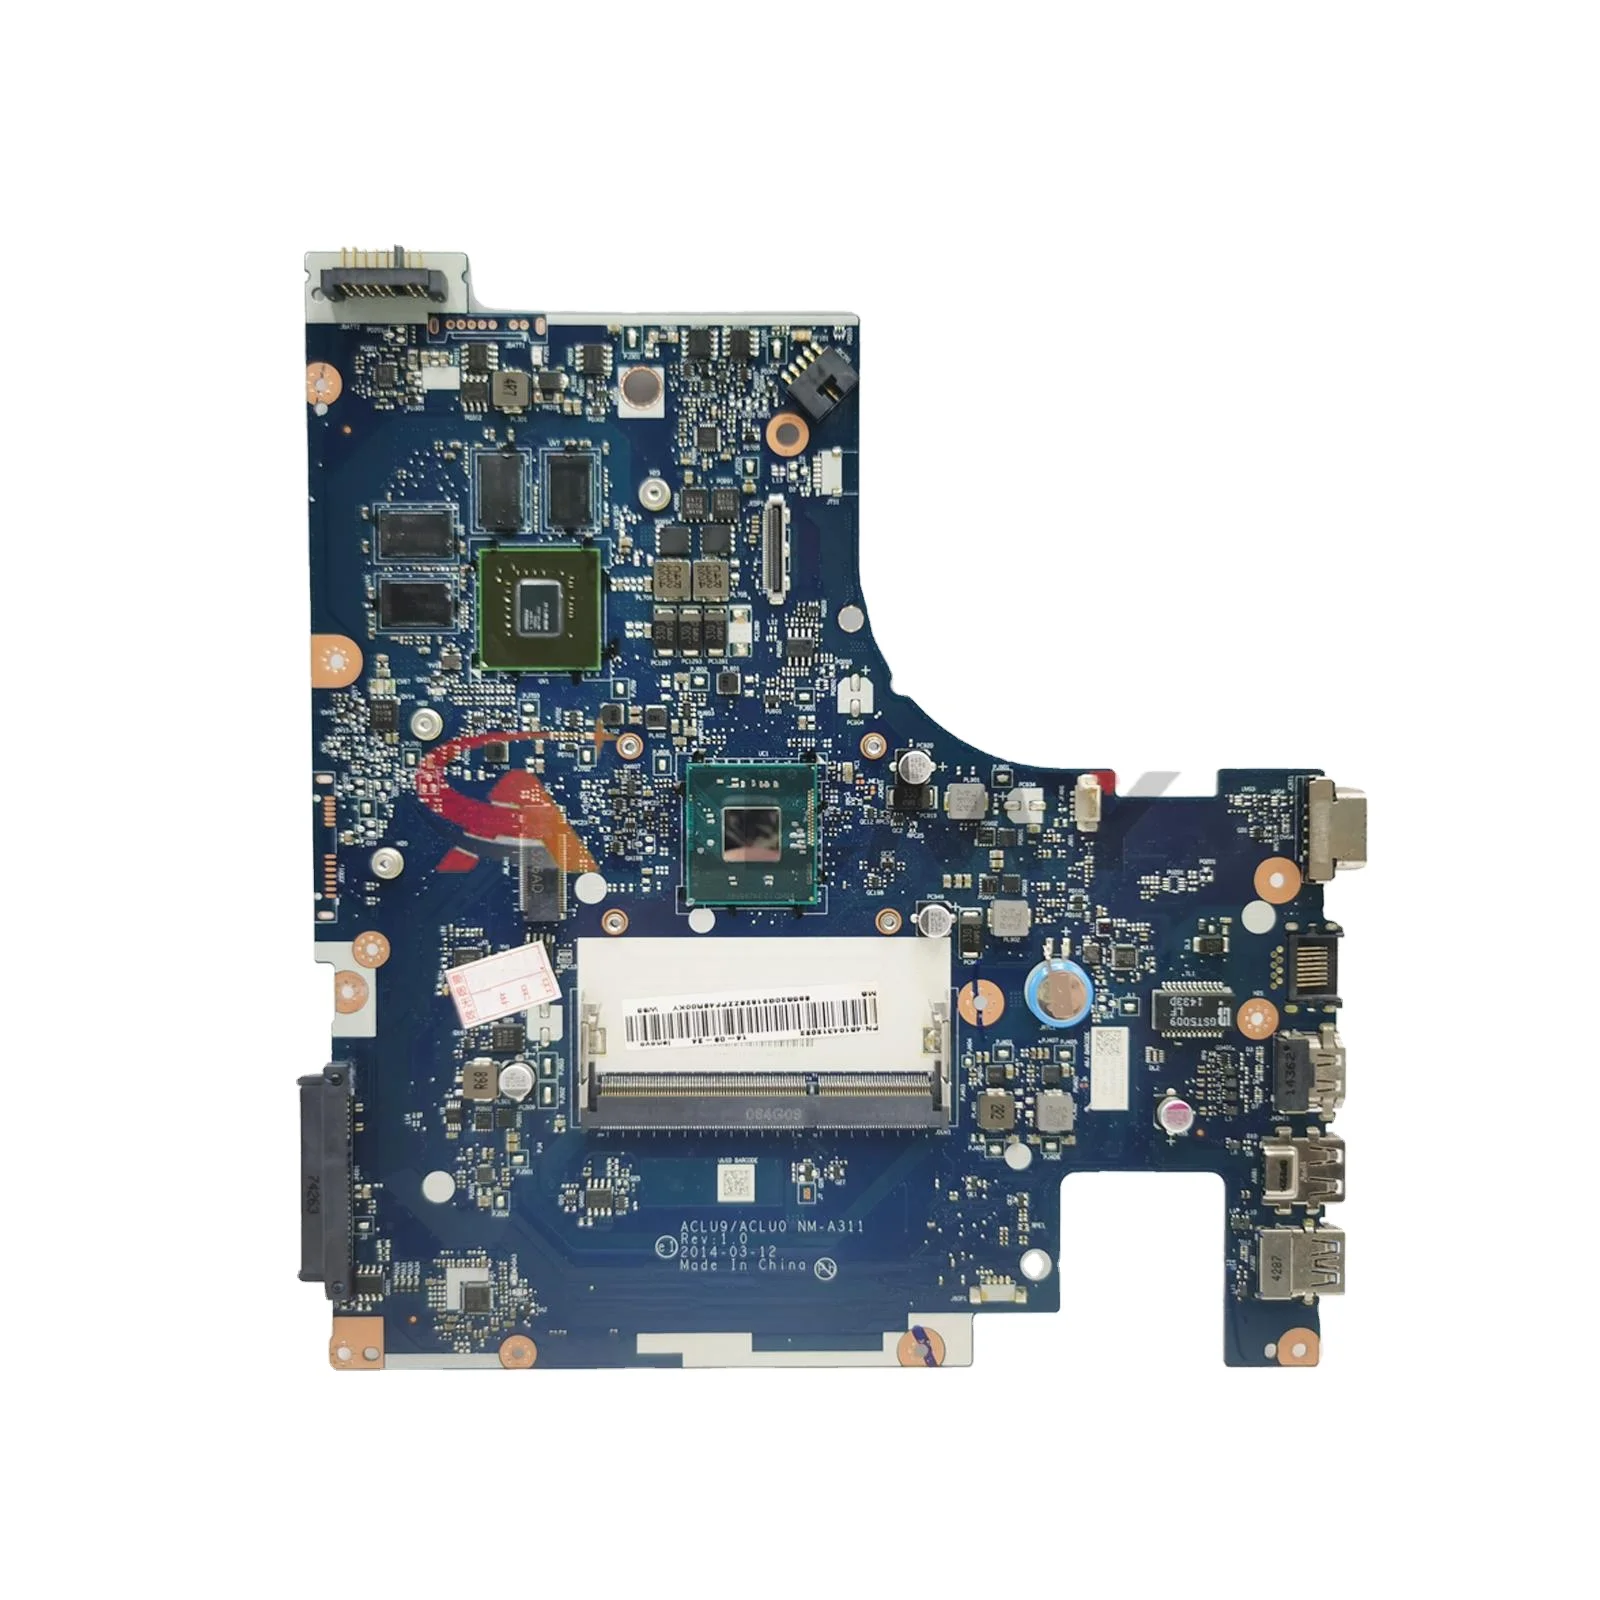 

ACLU9 ACLU0 NM-A311 For Lenovo Ideapad G50-30 Laptop Motherboard With N2830 N2840 N3530 N3540 CPU GT820M 2GB GPU